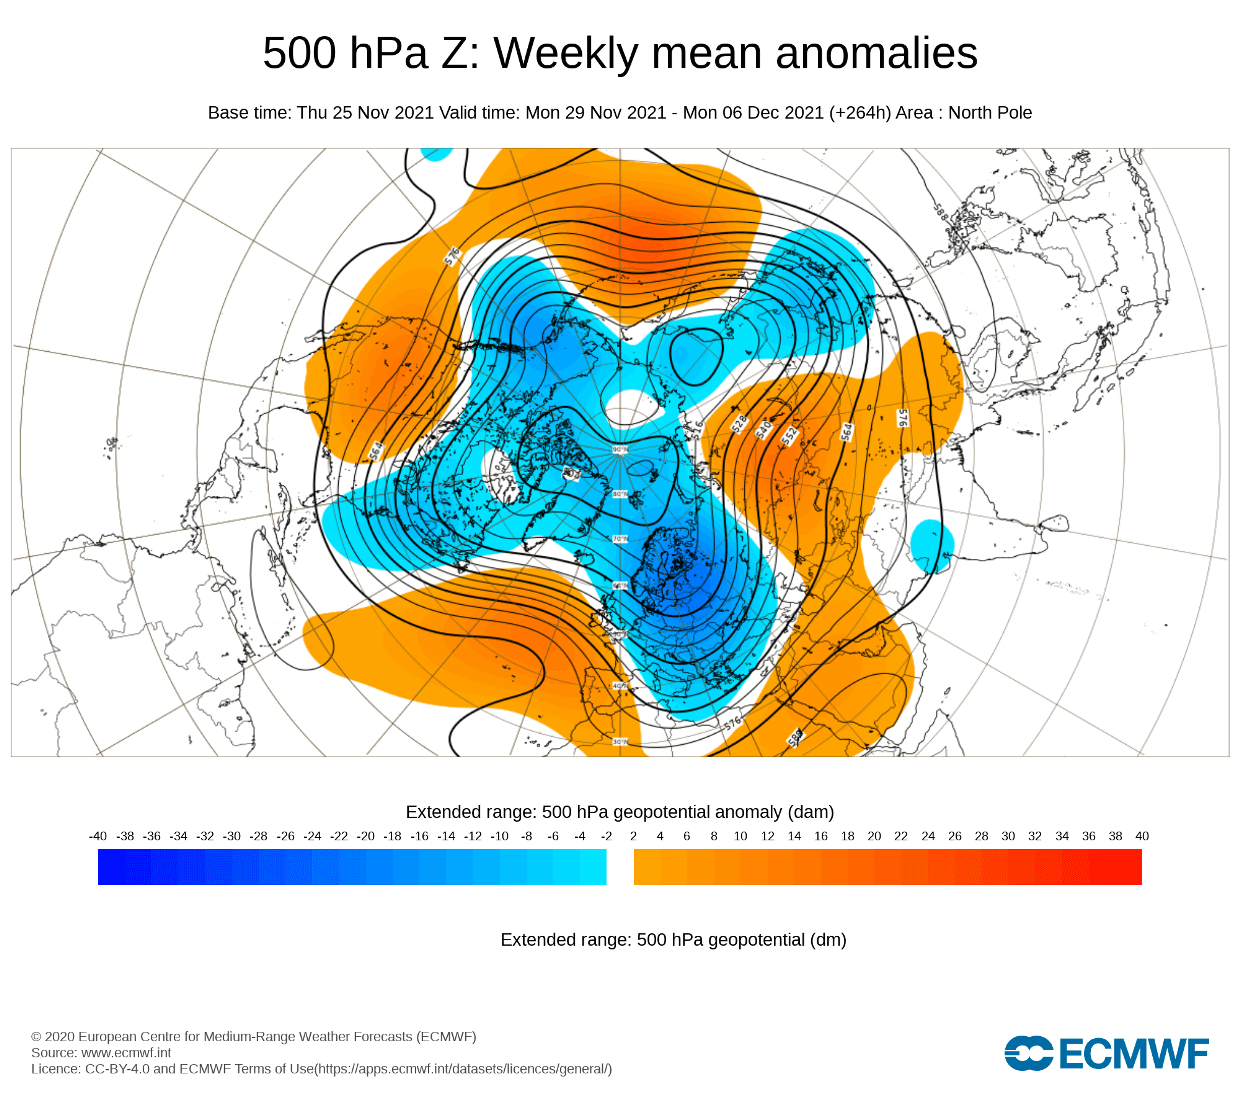 stratospheric-polar-vortex-warming-winter-season-forecast-pressure-pattern-anomaly-ecmwf